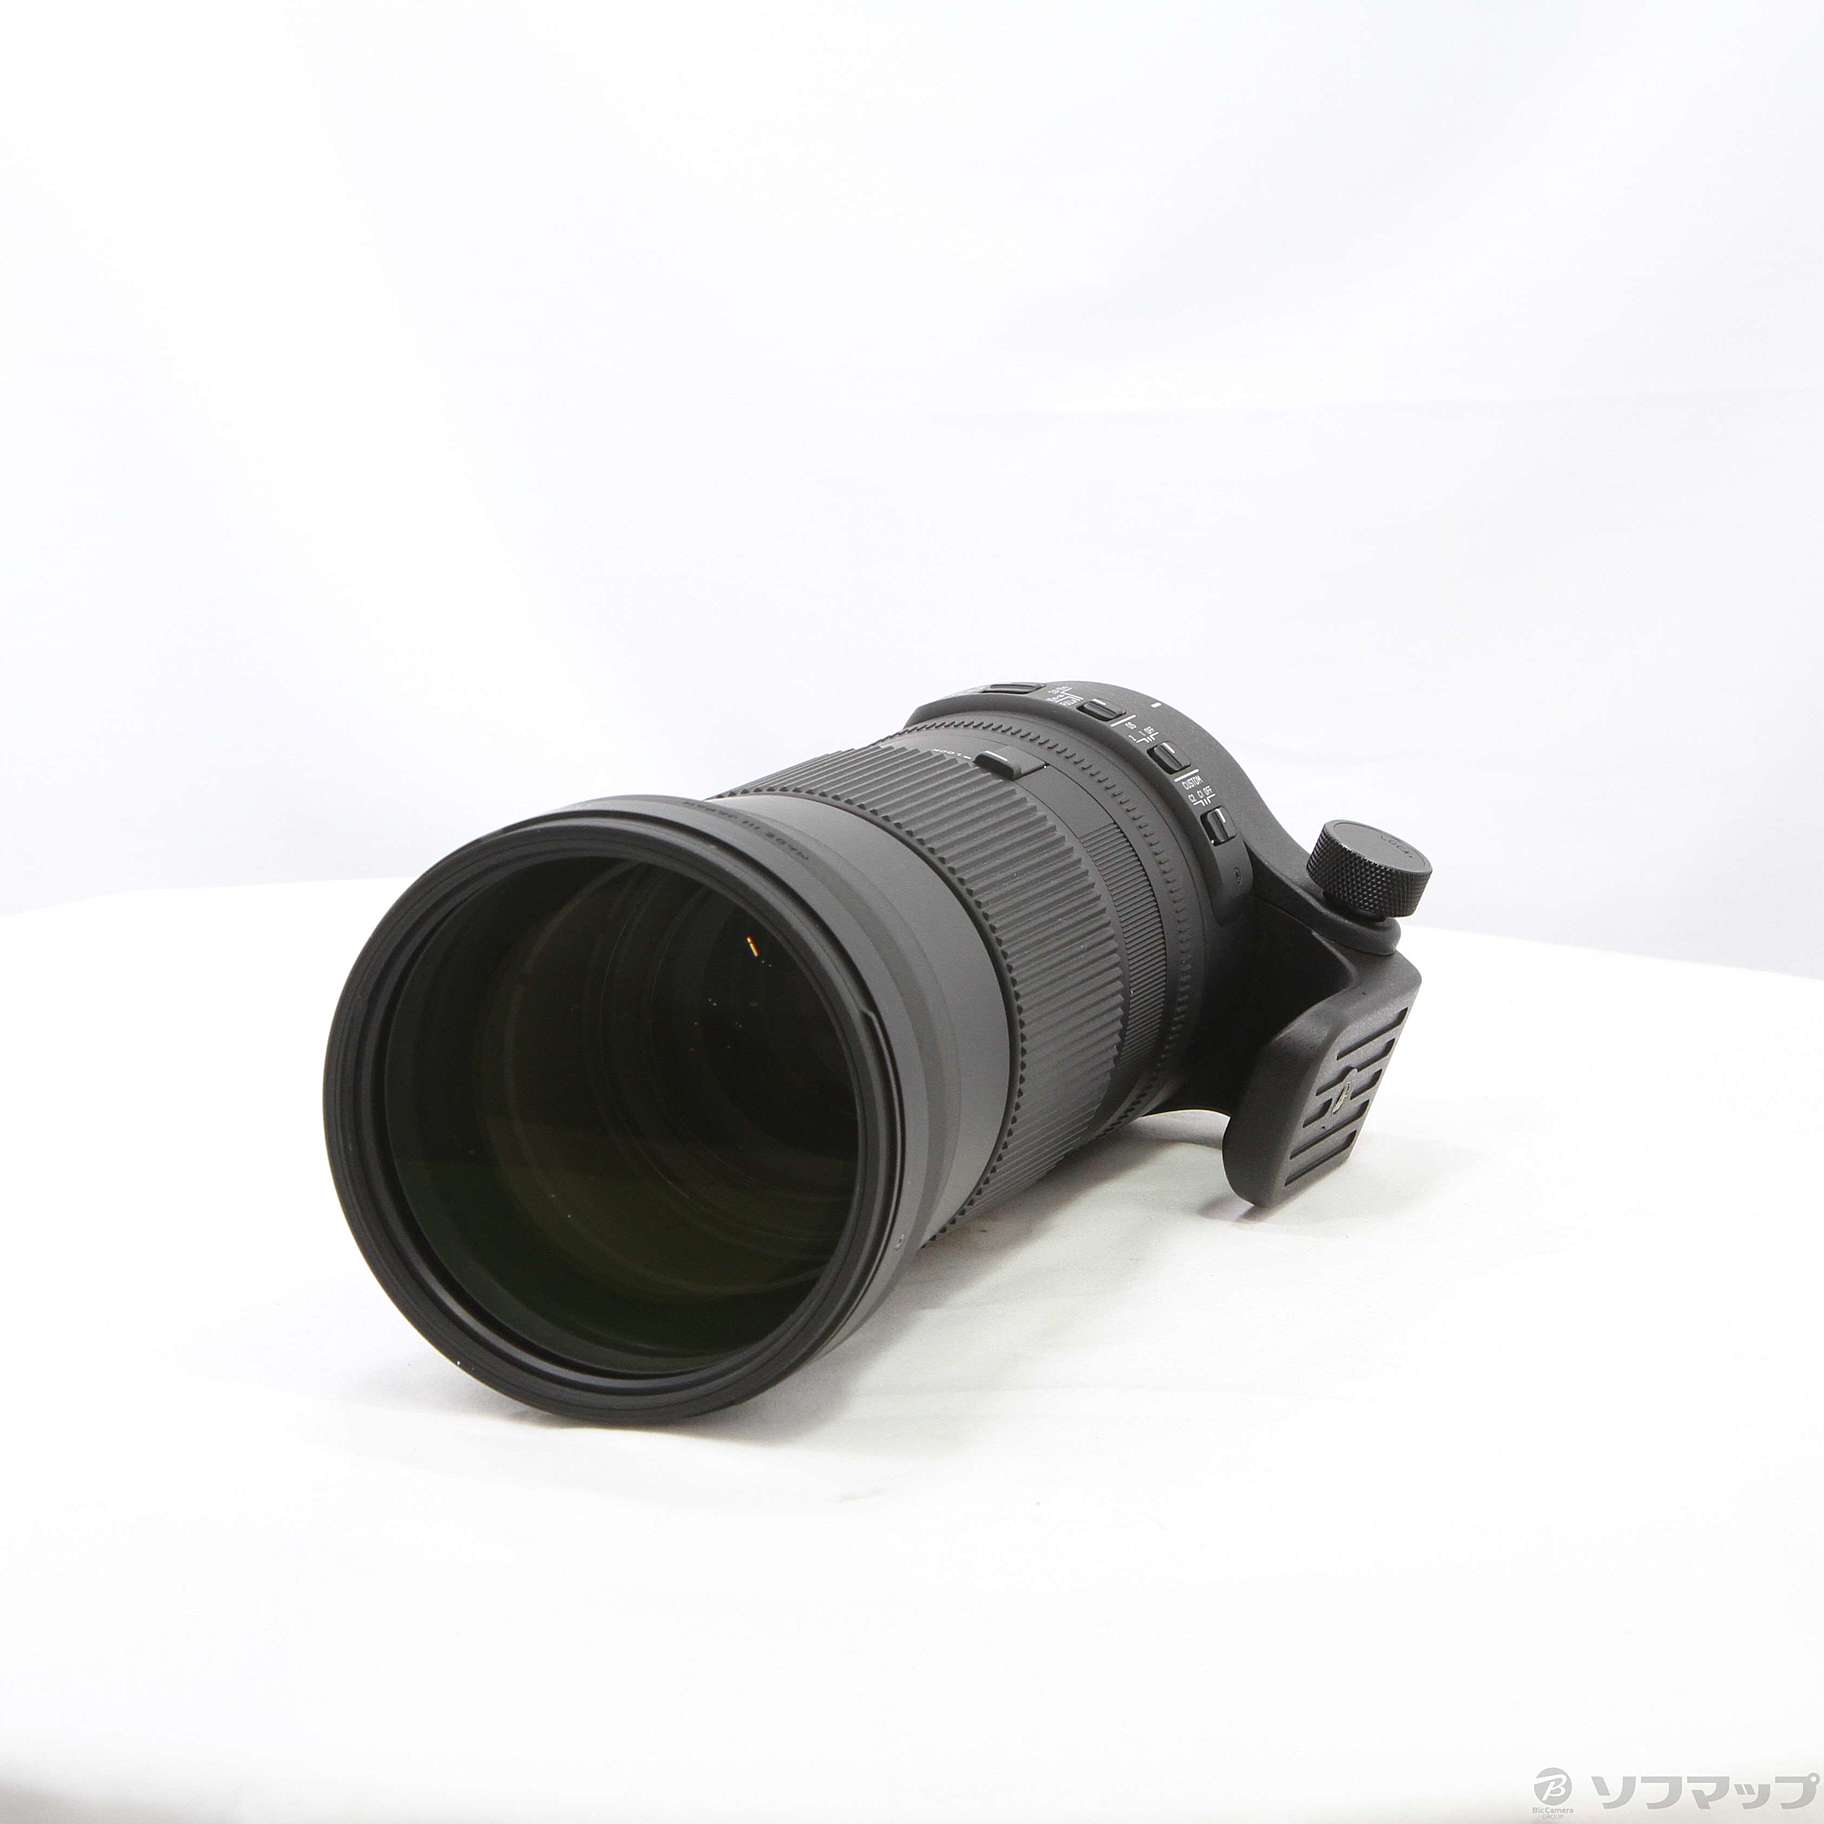 中古】SIGMA 150-600mm F5-6.3 DG OS HSM (Nikon用) Contemporary